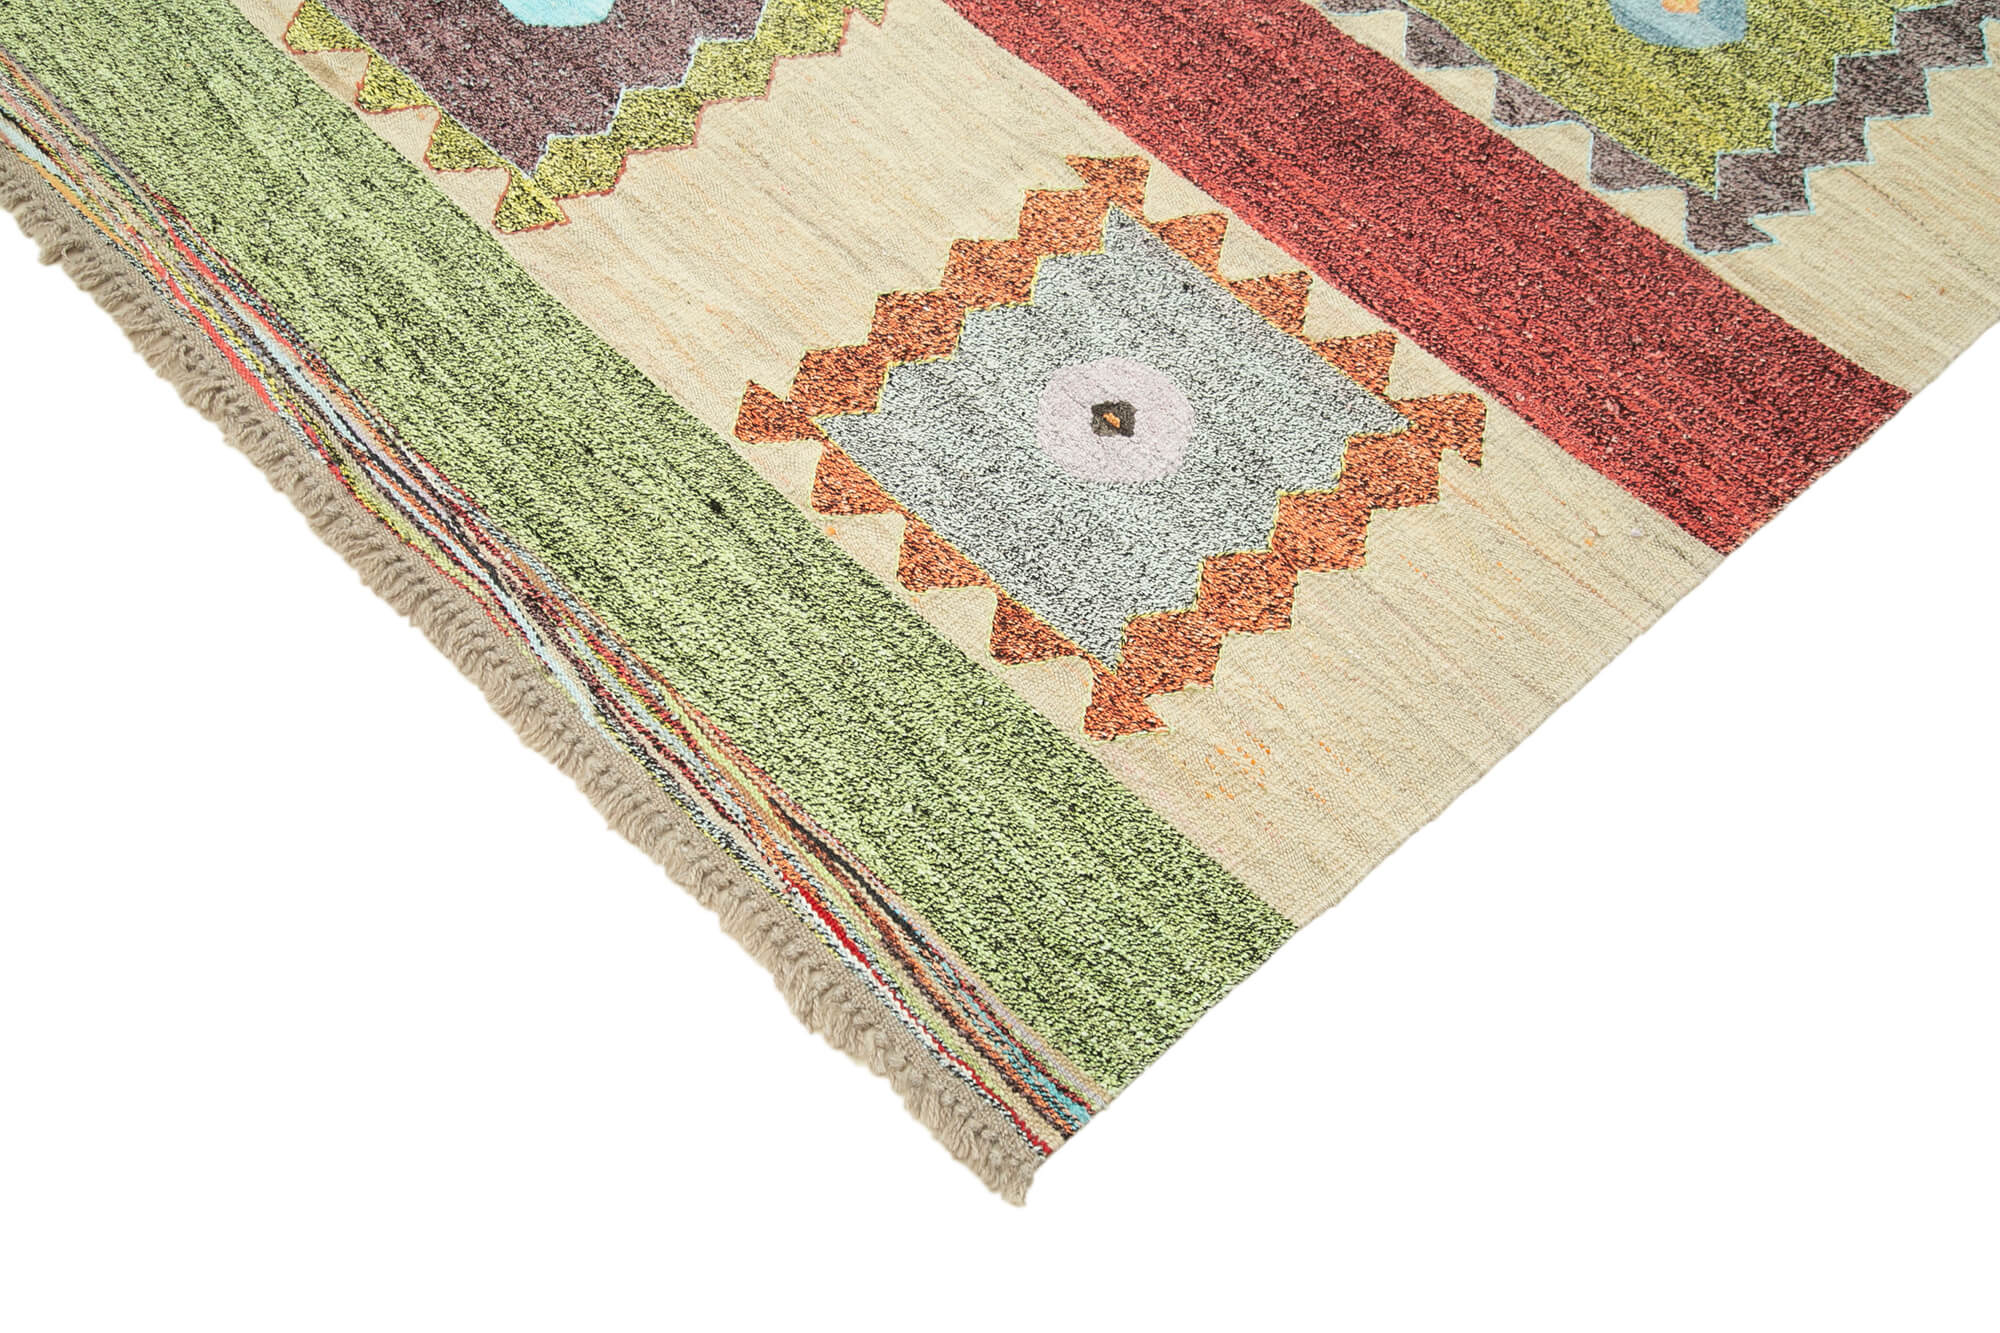 10x14 rugs